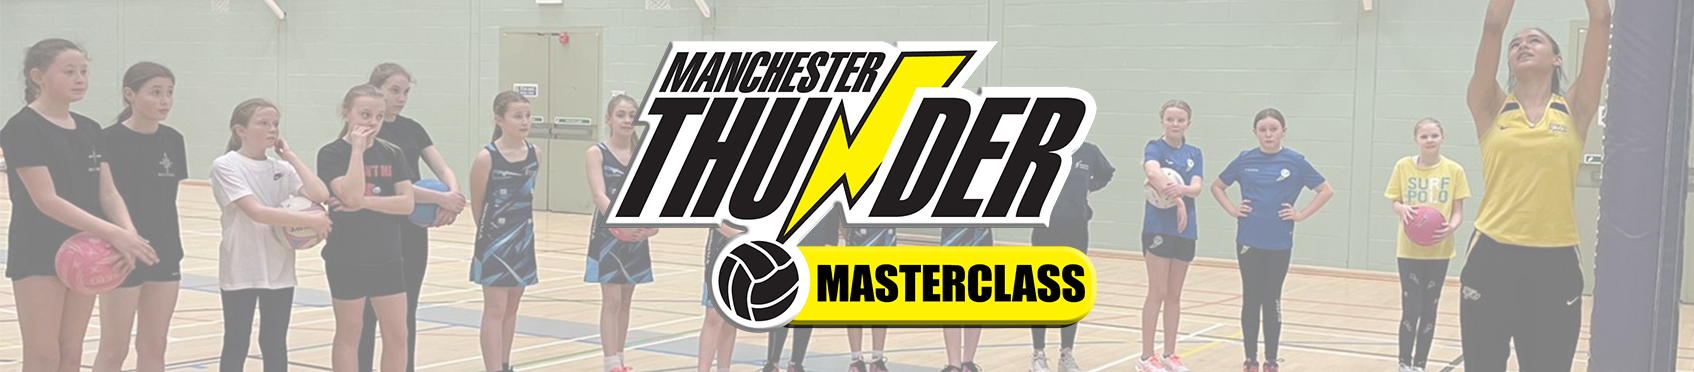 Manchester Thunder Masterclass